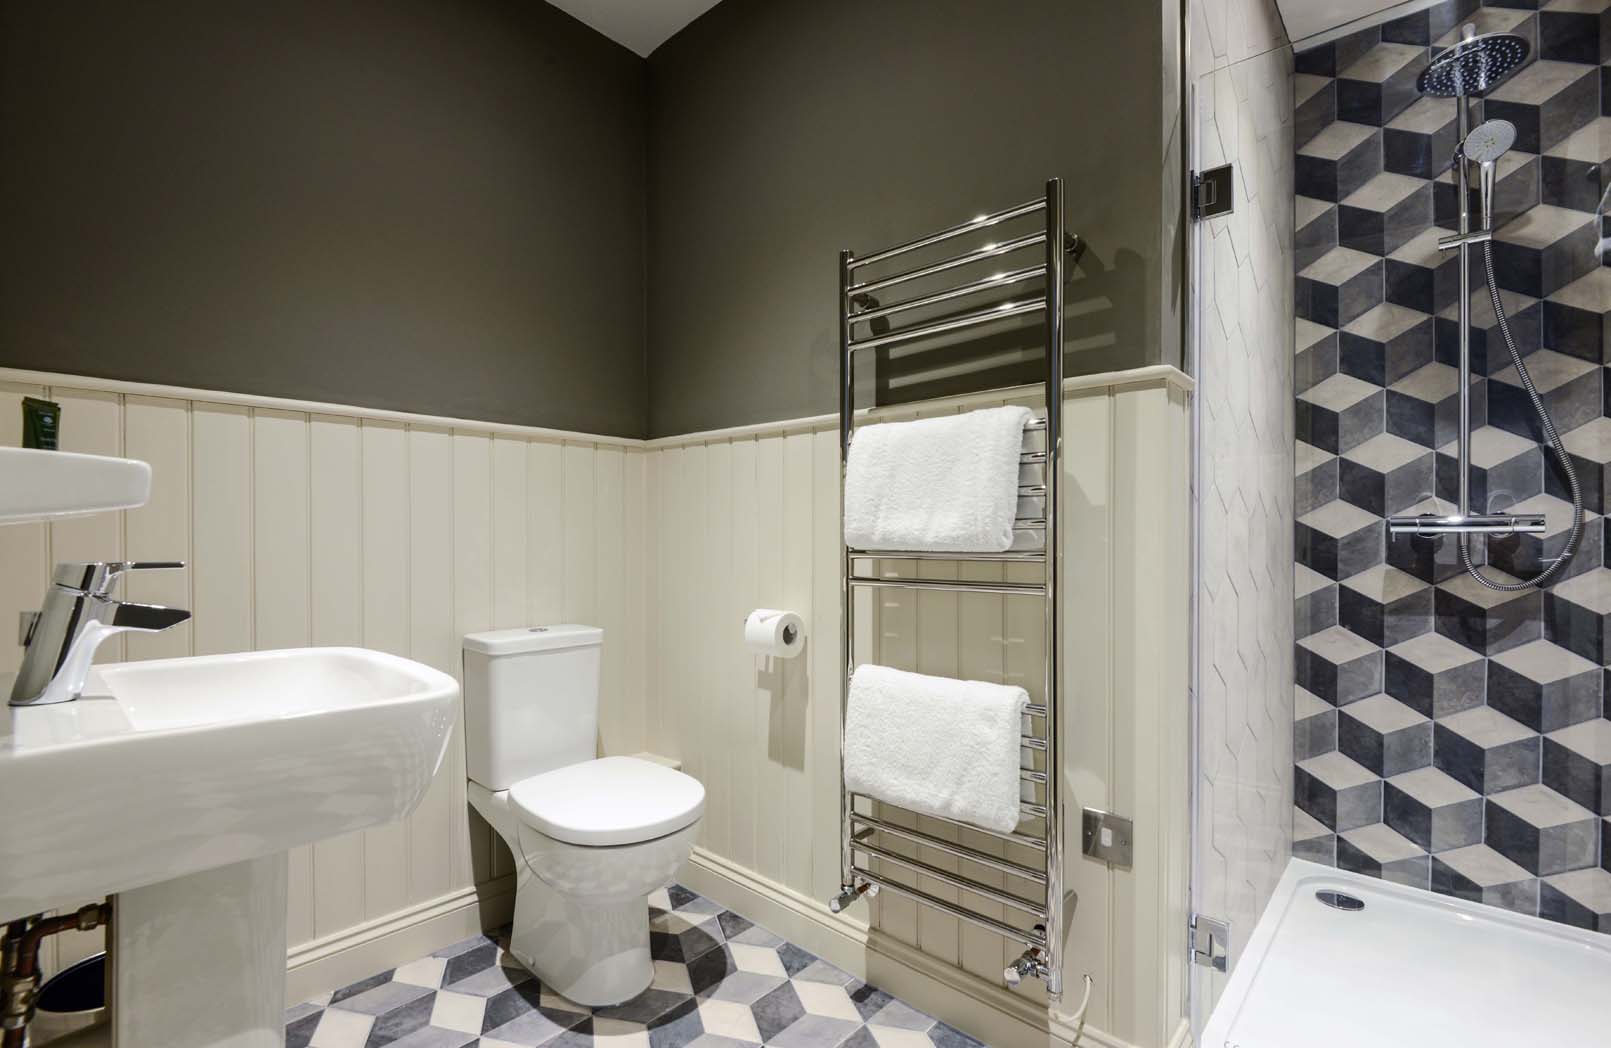 Barrow Gurney - Geometric tiles, white bathroom, walk in shower, heated towel rack